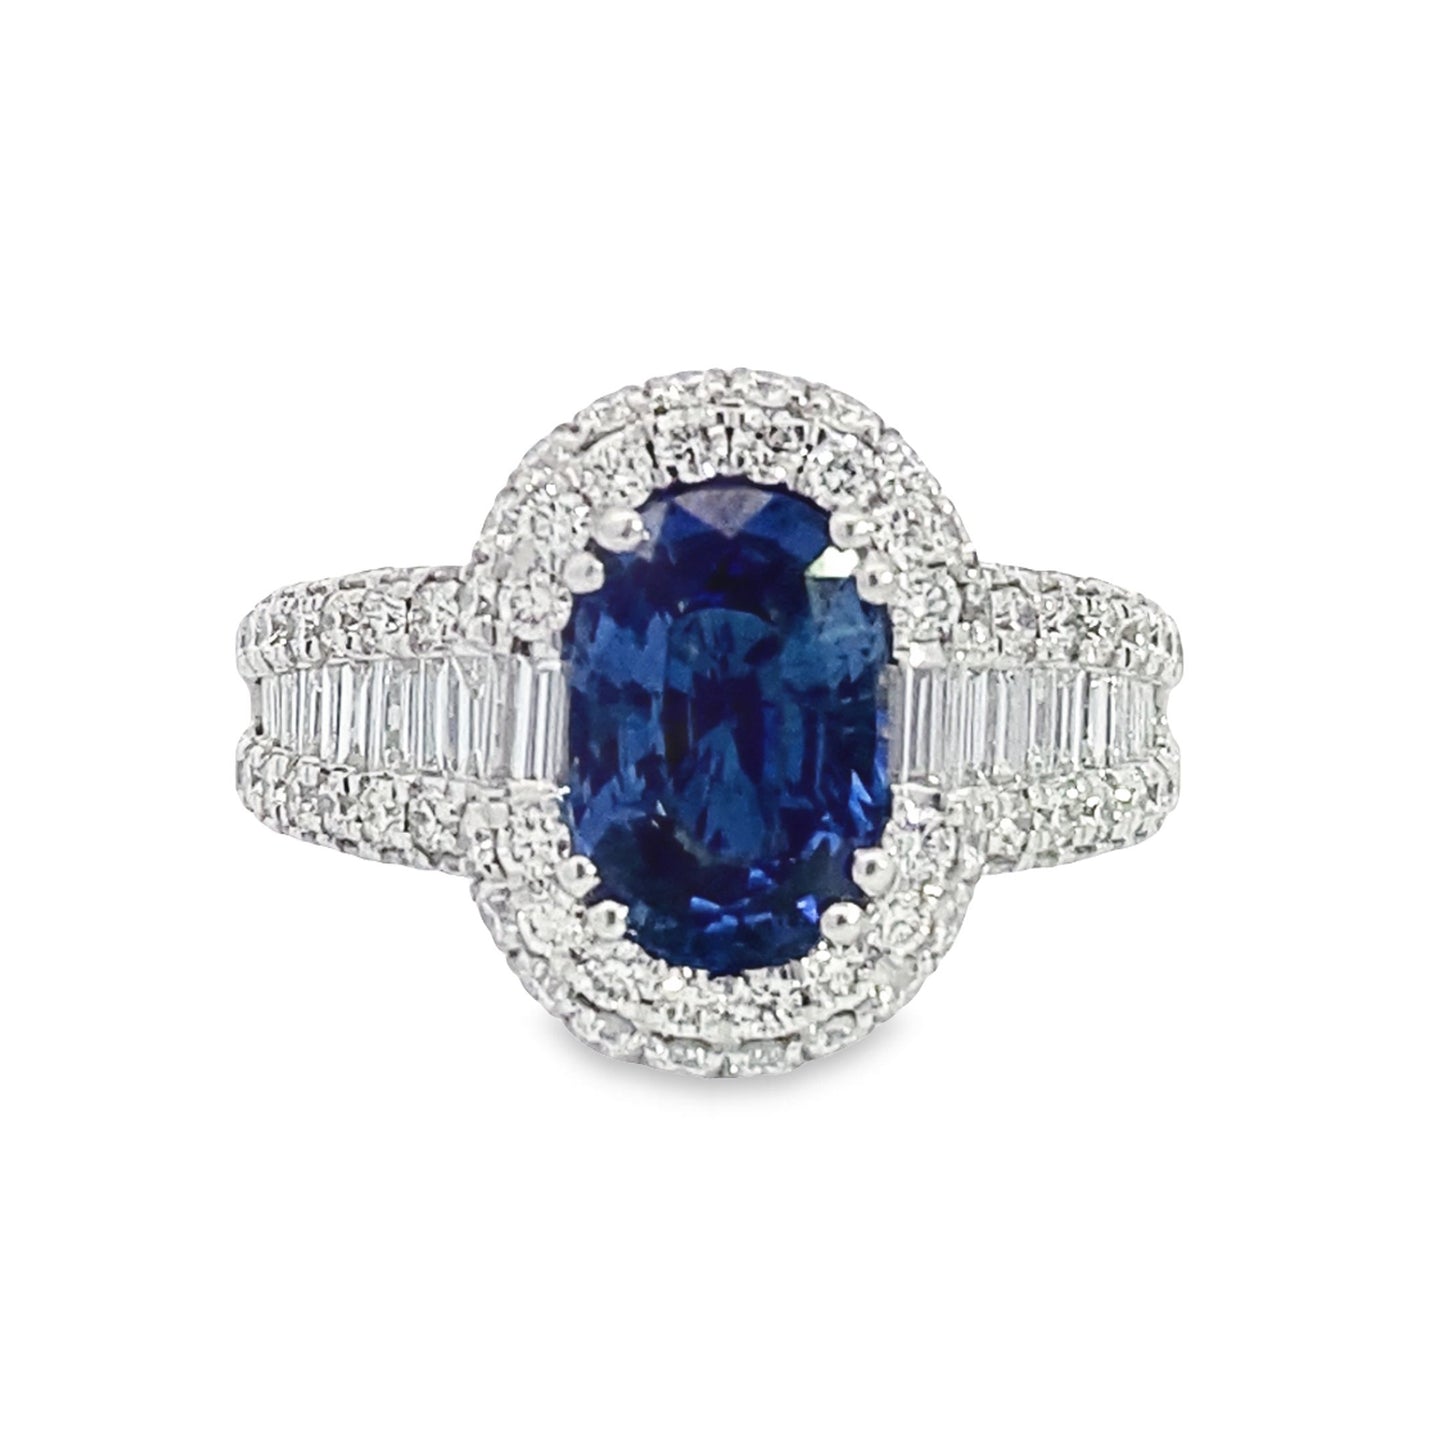 Stern International | 14K White Gold Diamond and Sapphire Fashion Ring